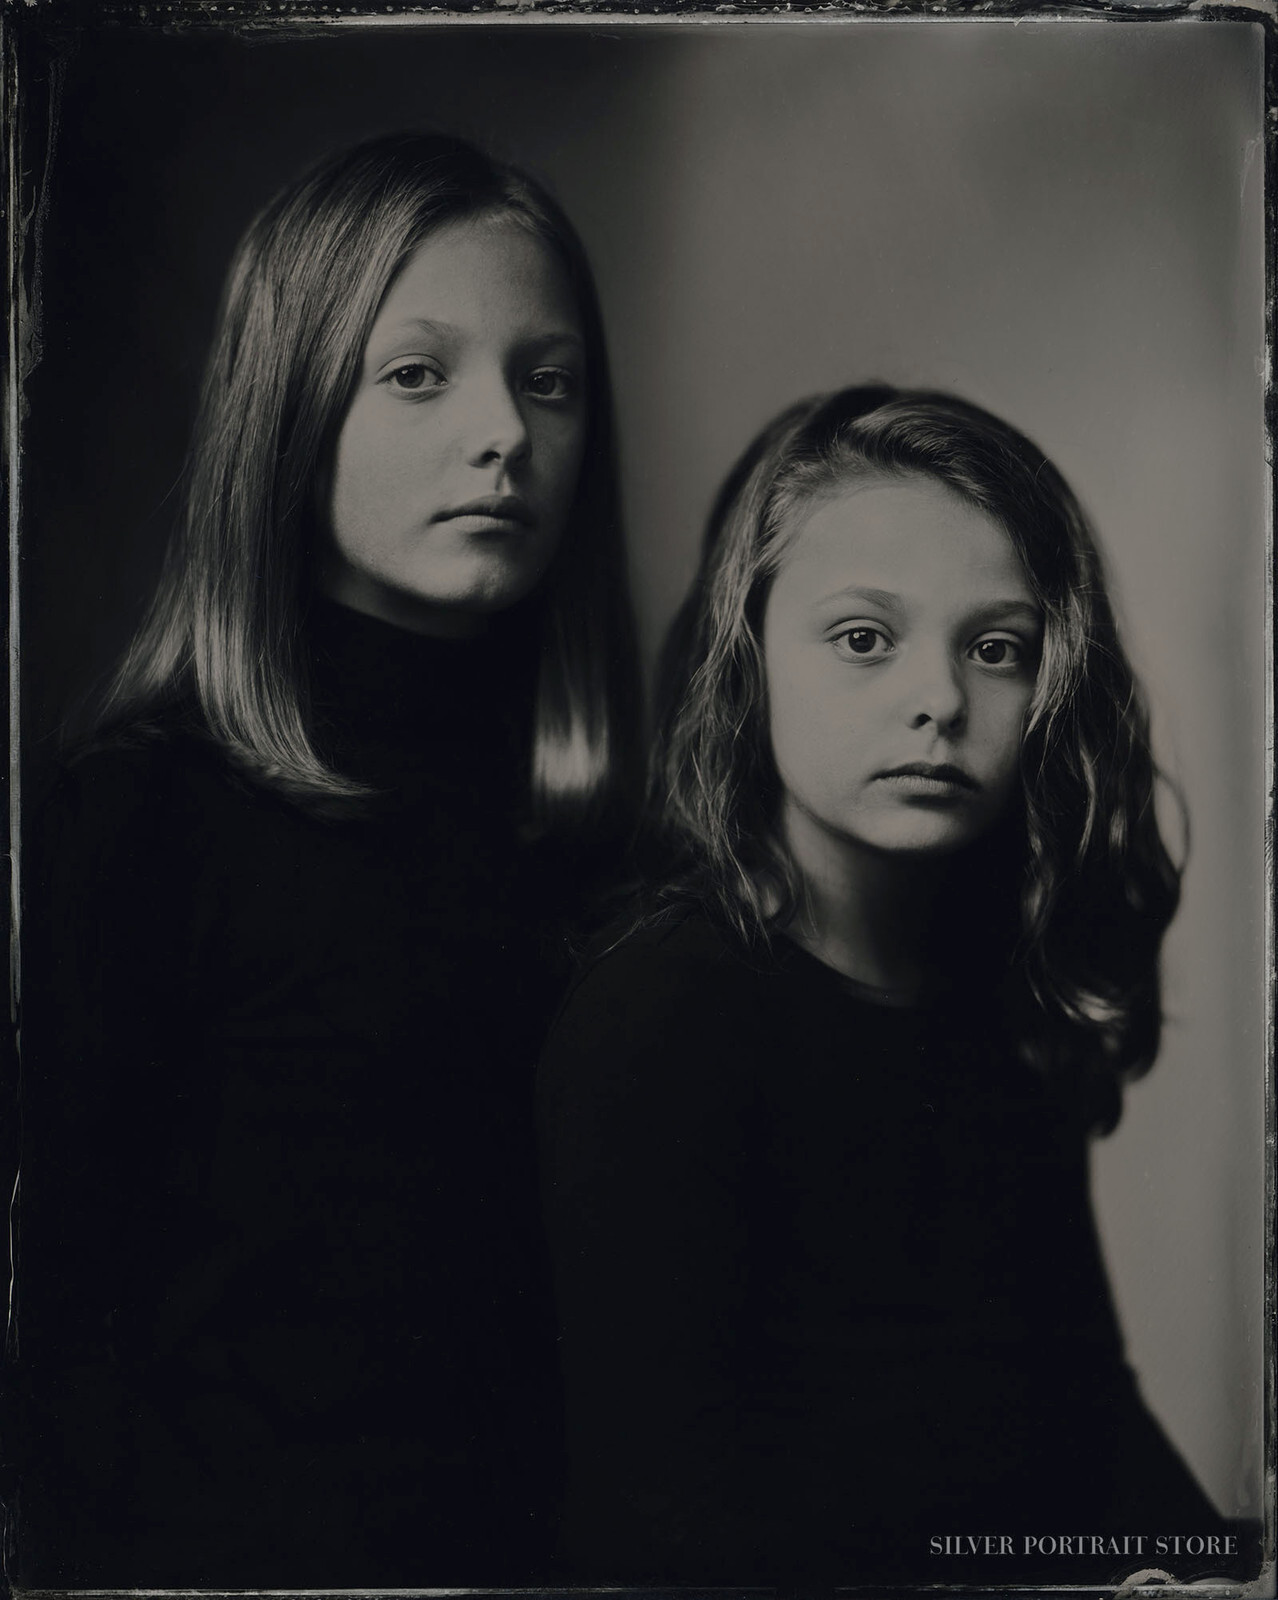 Nikola & Kiara-Silver Portrait Store-scan from Wet plate collodion-Tintype 20 x 25 cm.